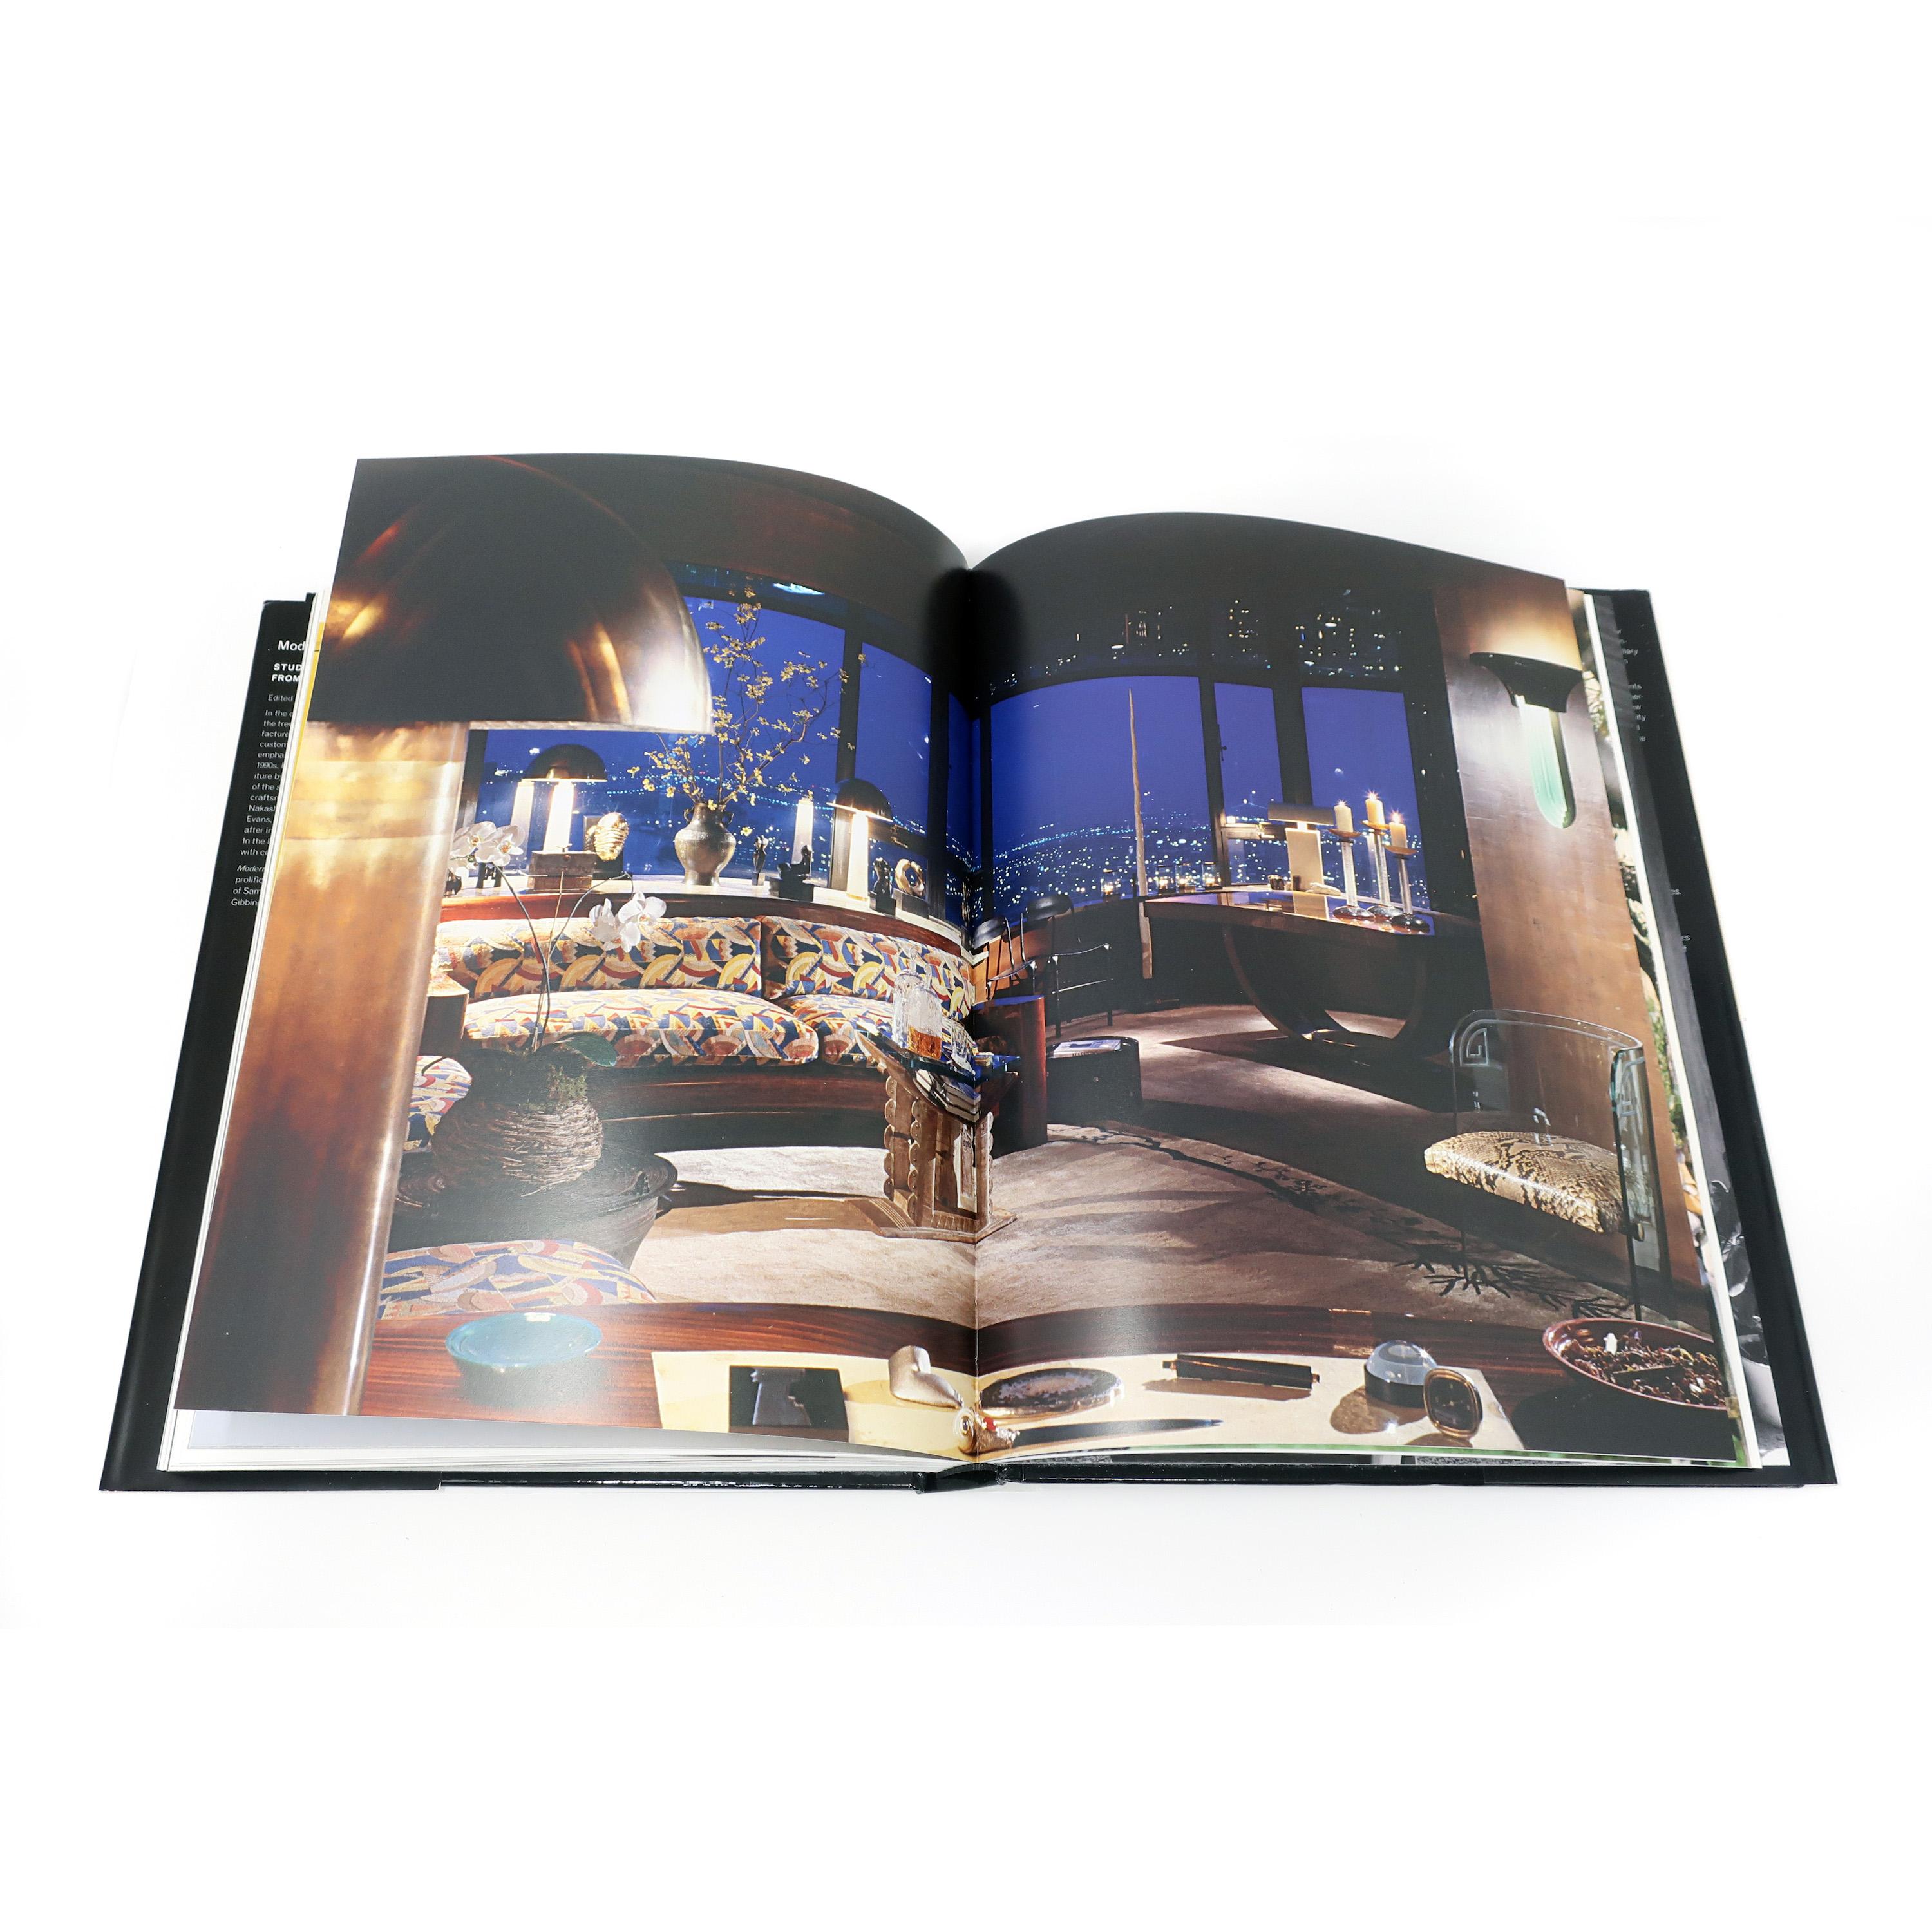 Modern Americana Studio Furniture book by Todd Merrill and Julie Iovine 3